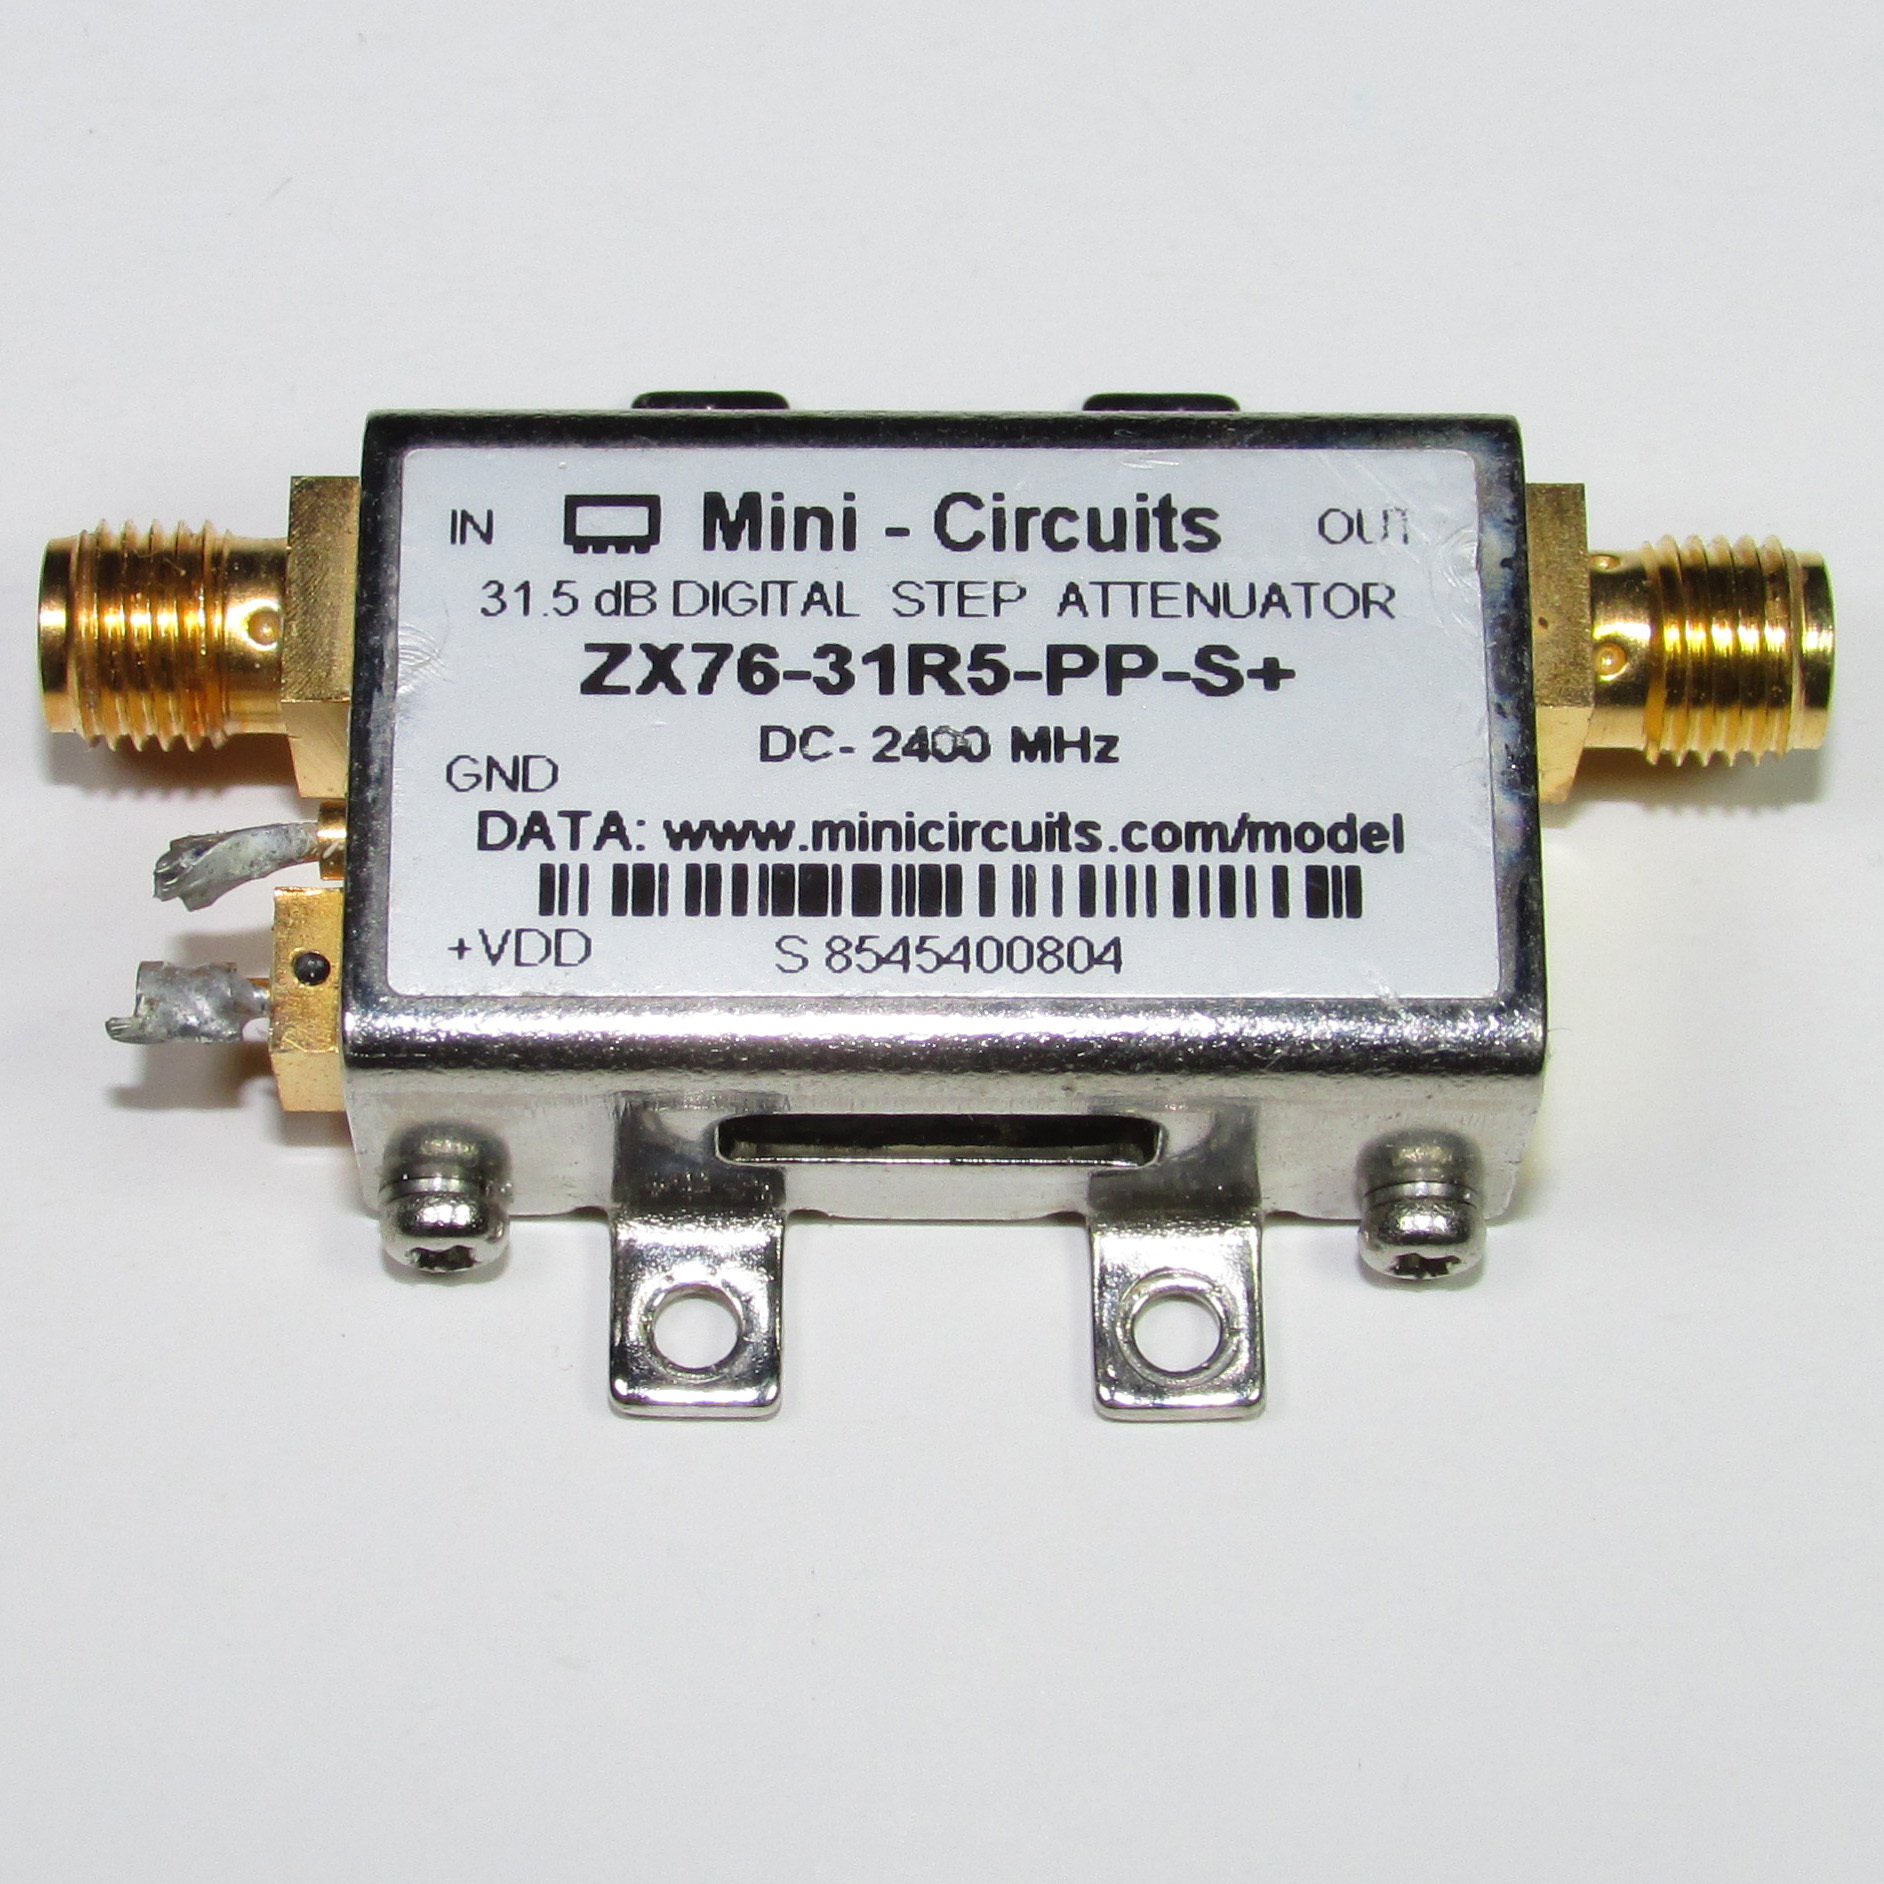 Mini-Circuits ZX76-31R5-PP-S + DC-2400MHz SMA RF Step Attenuator